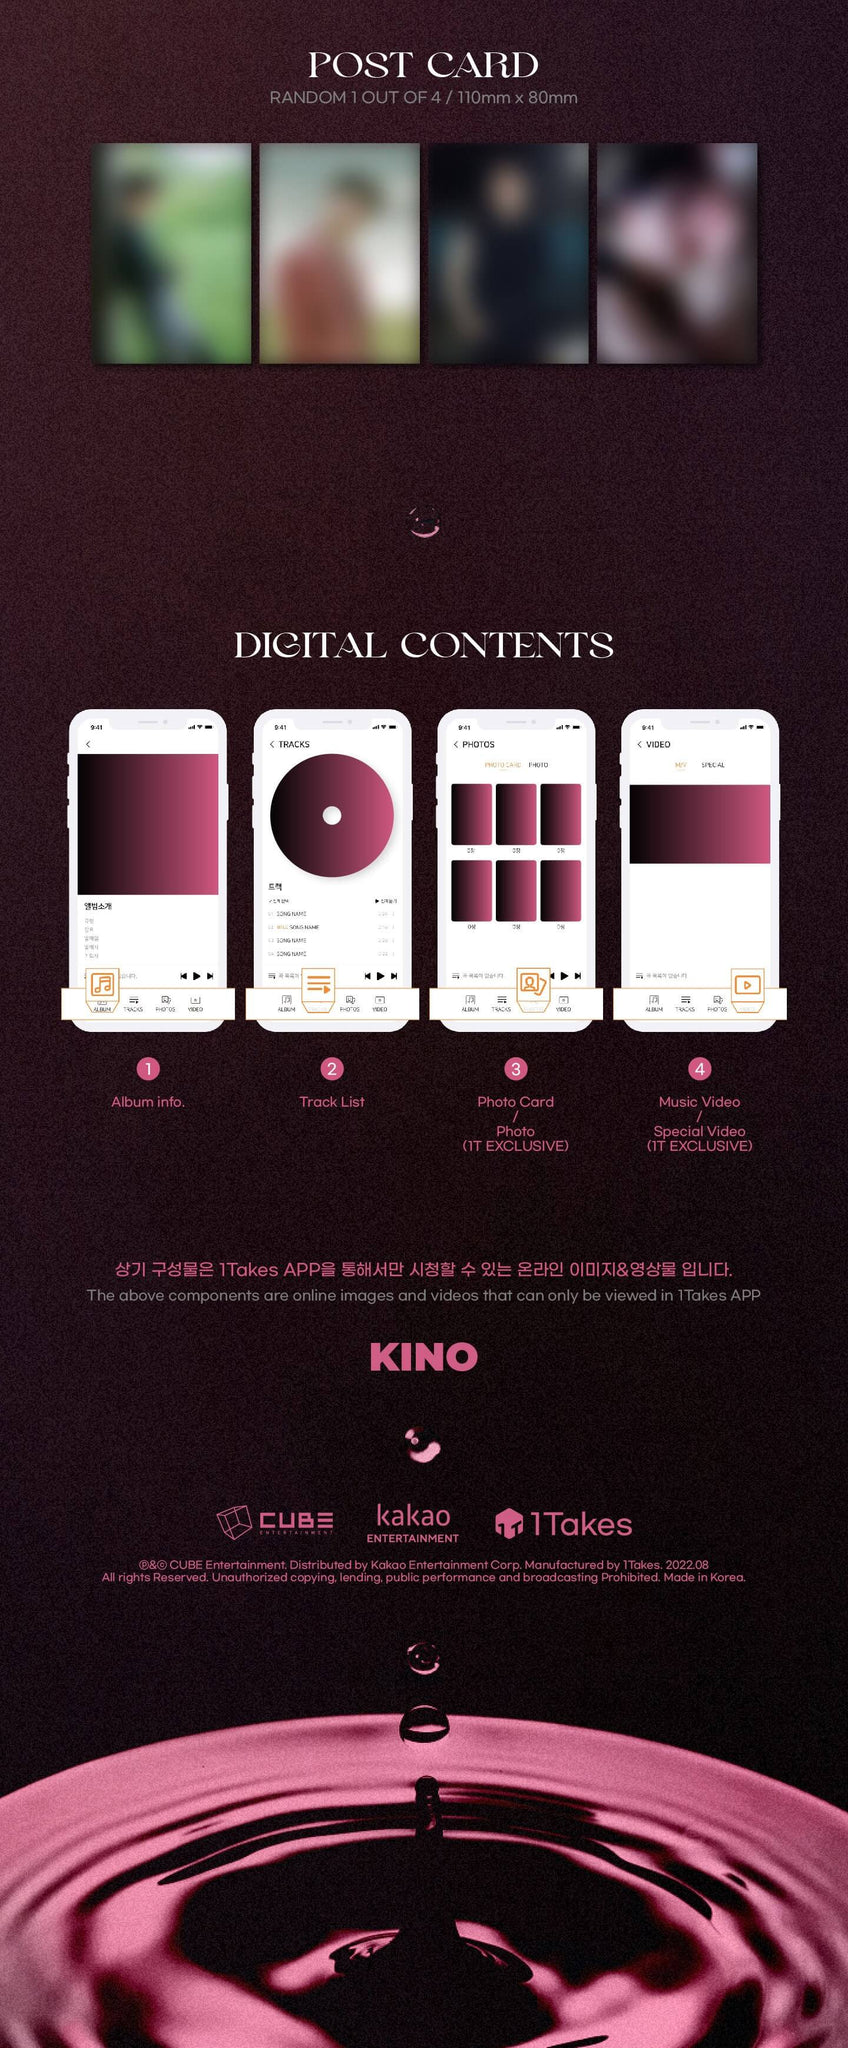 Kino Special Single Album POSE - Platform Version Inclusions Postcard Digital Contents